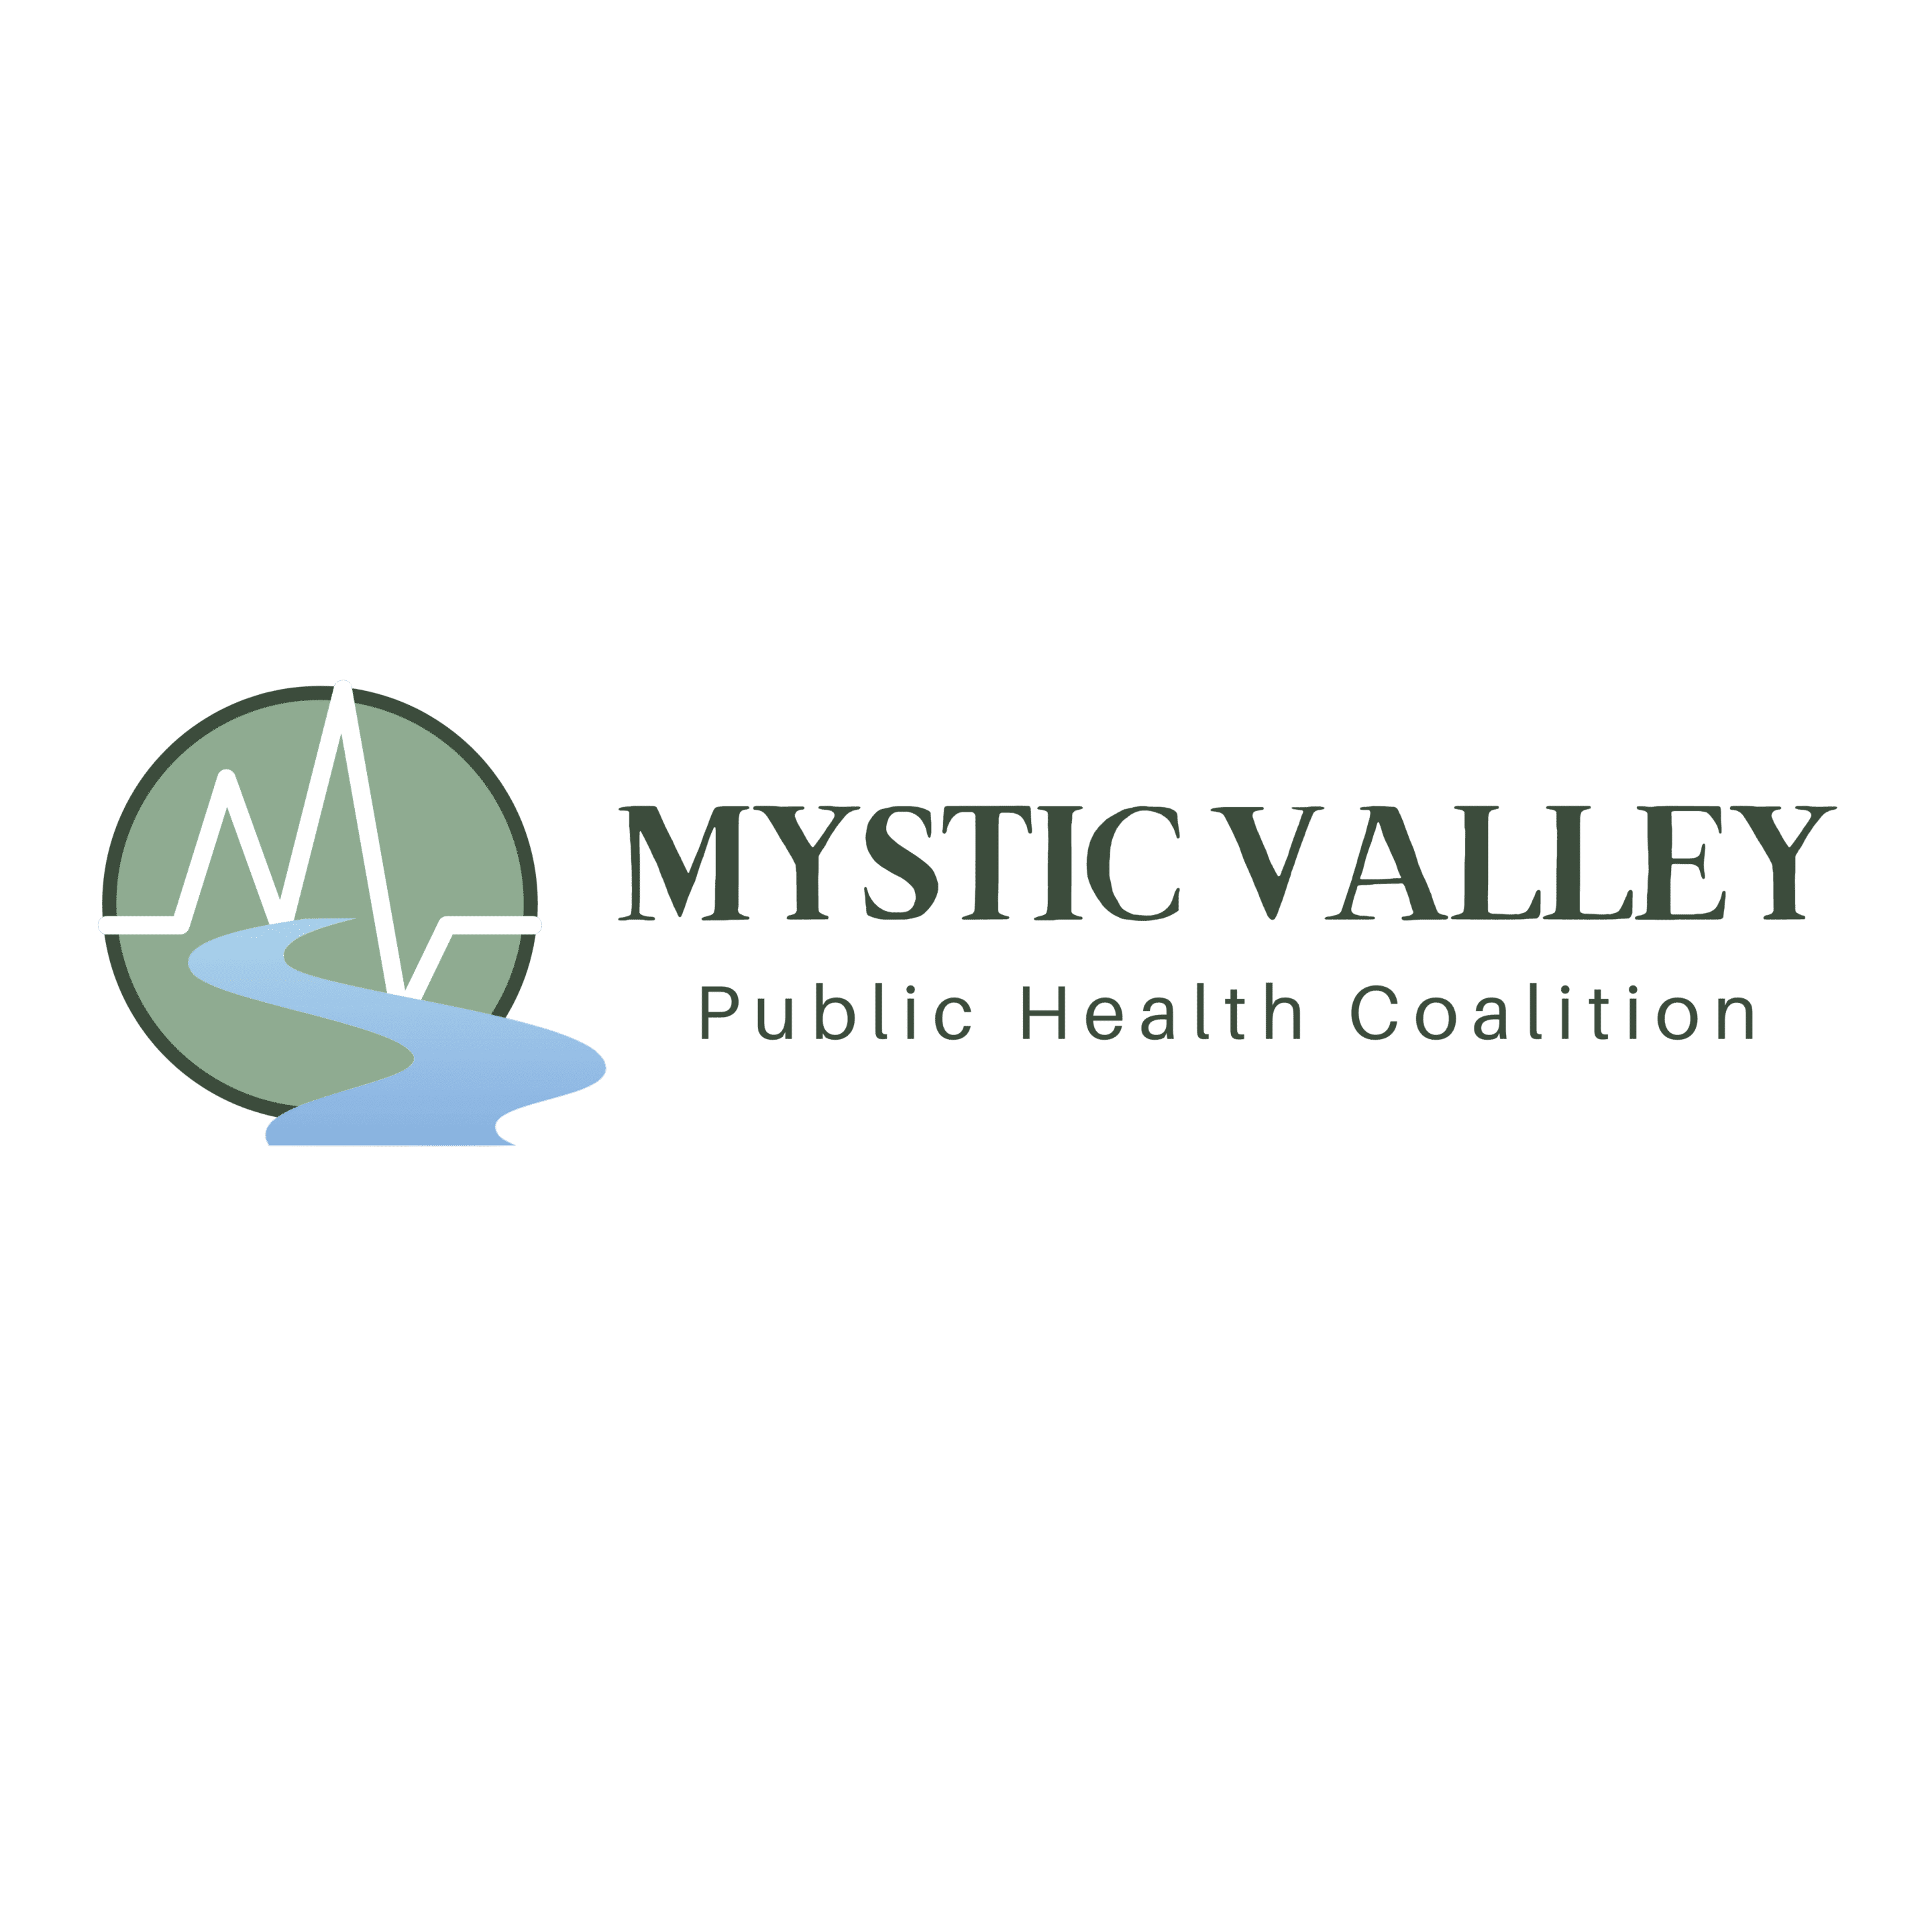 Mystic Valley Public Health Coalition